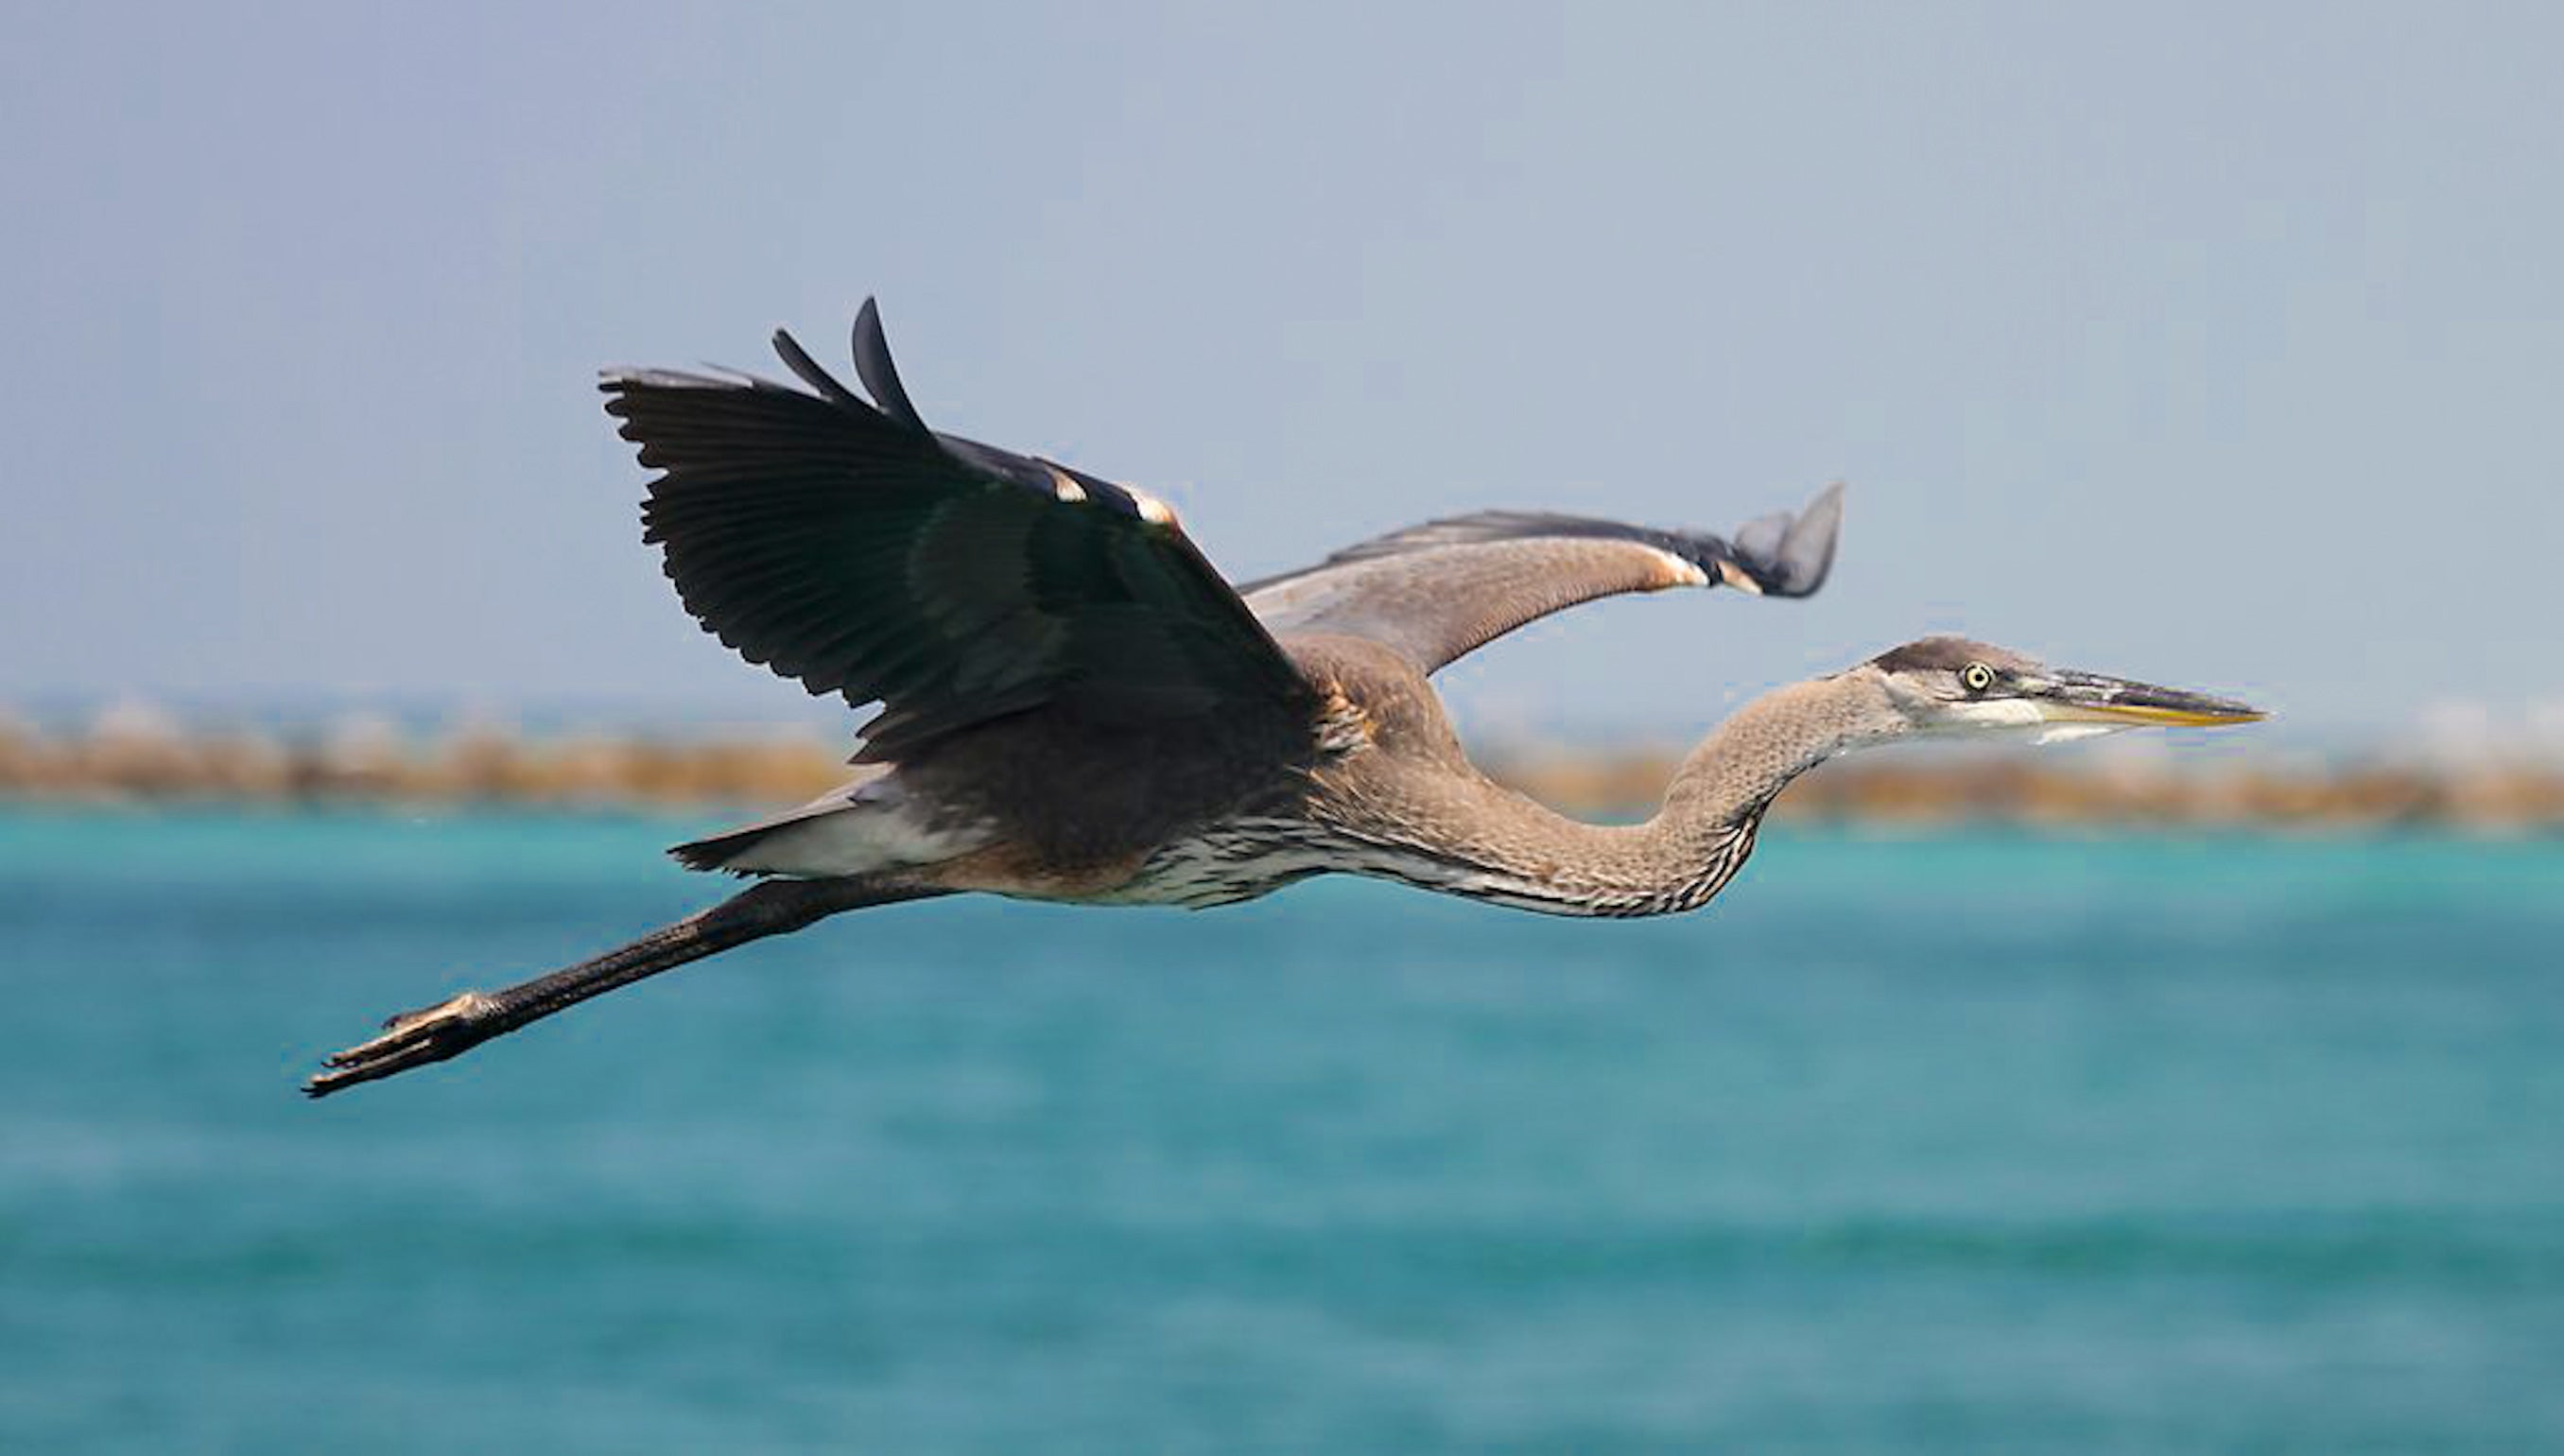 Abundant wildlife on the Gulf